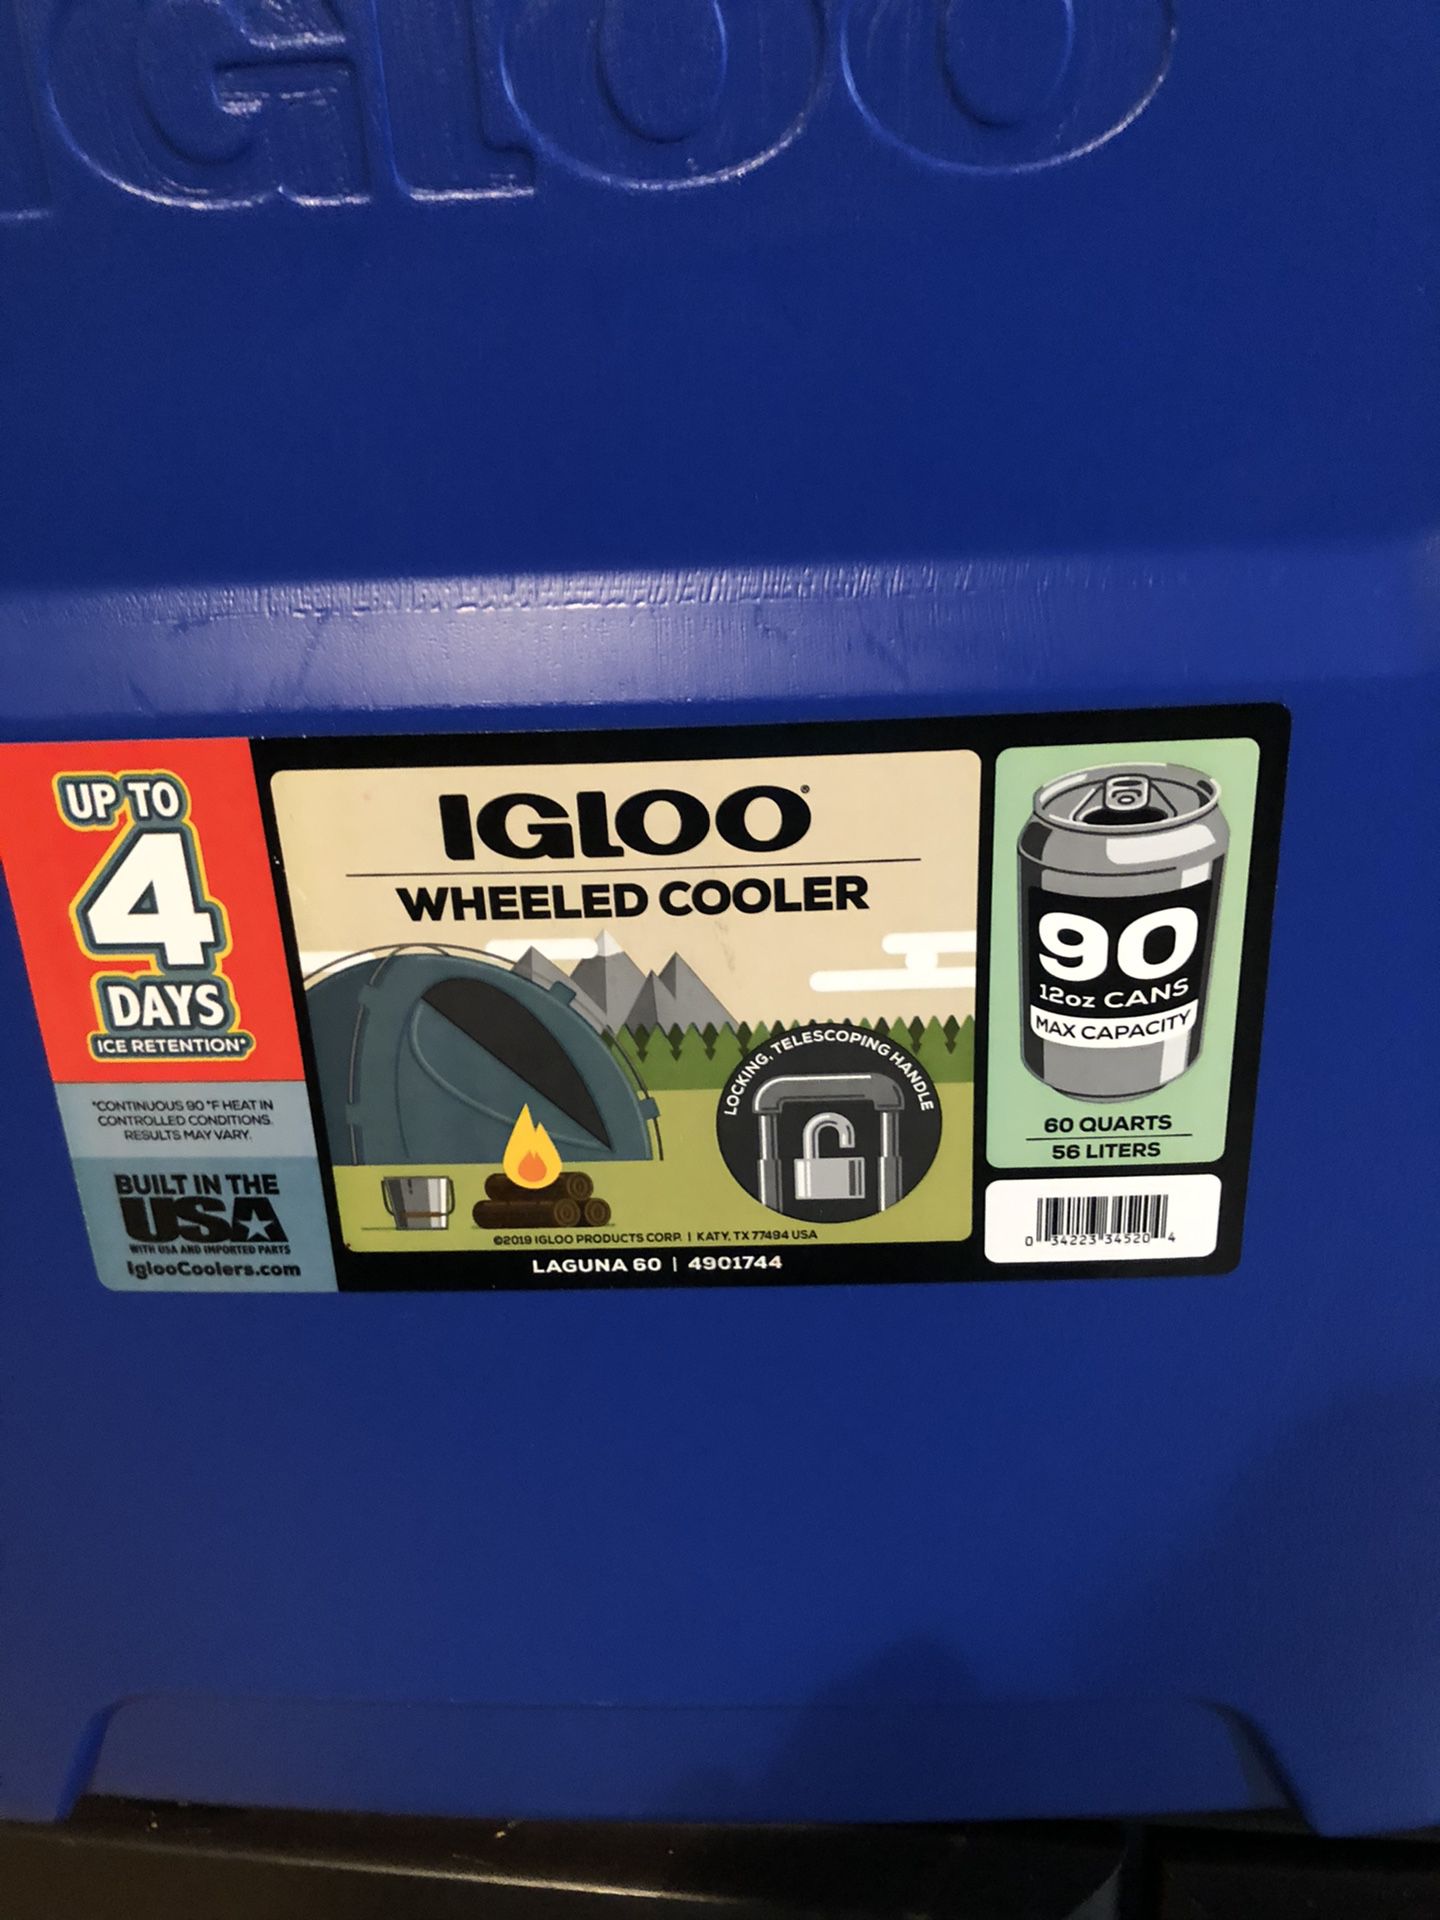 Igloo wheeled 60 Qt Laguna Roller Cooler 55 liters 90 cans